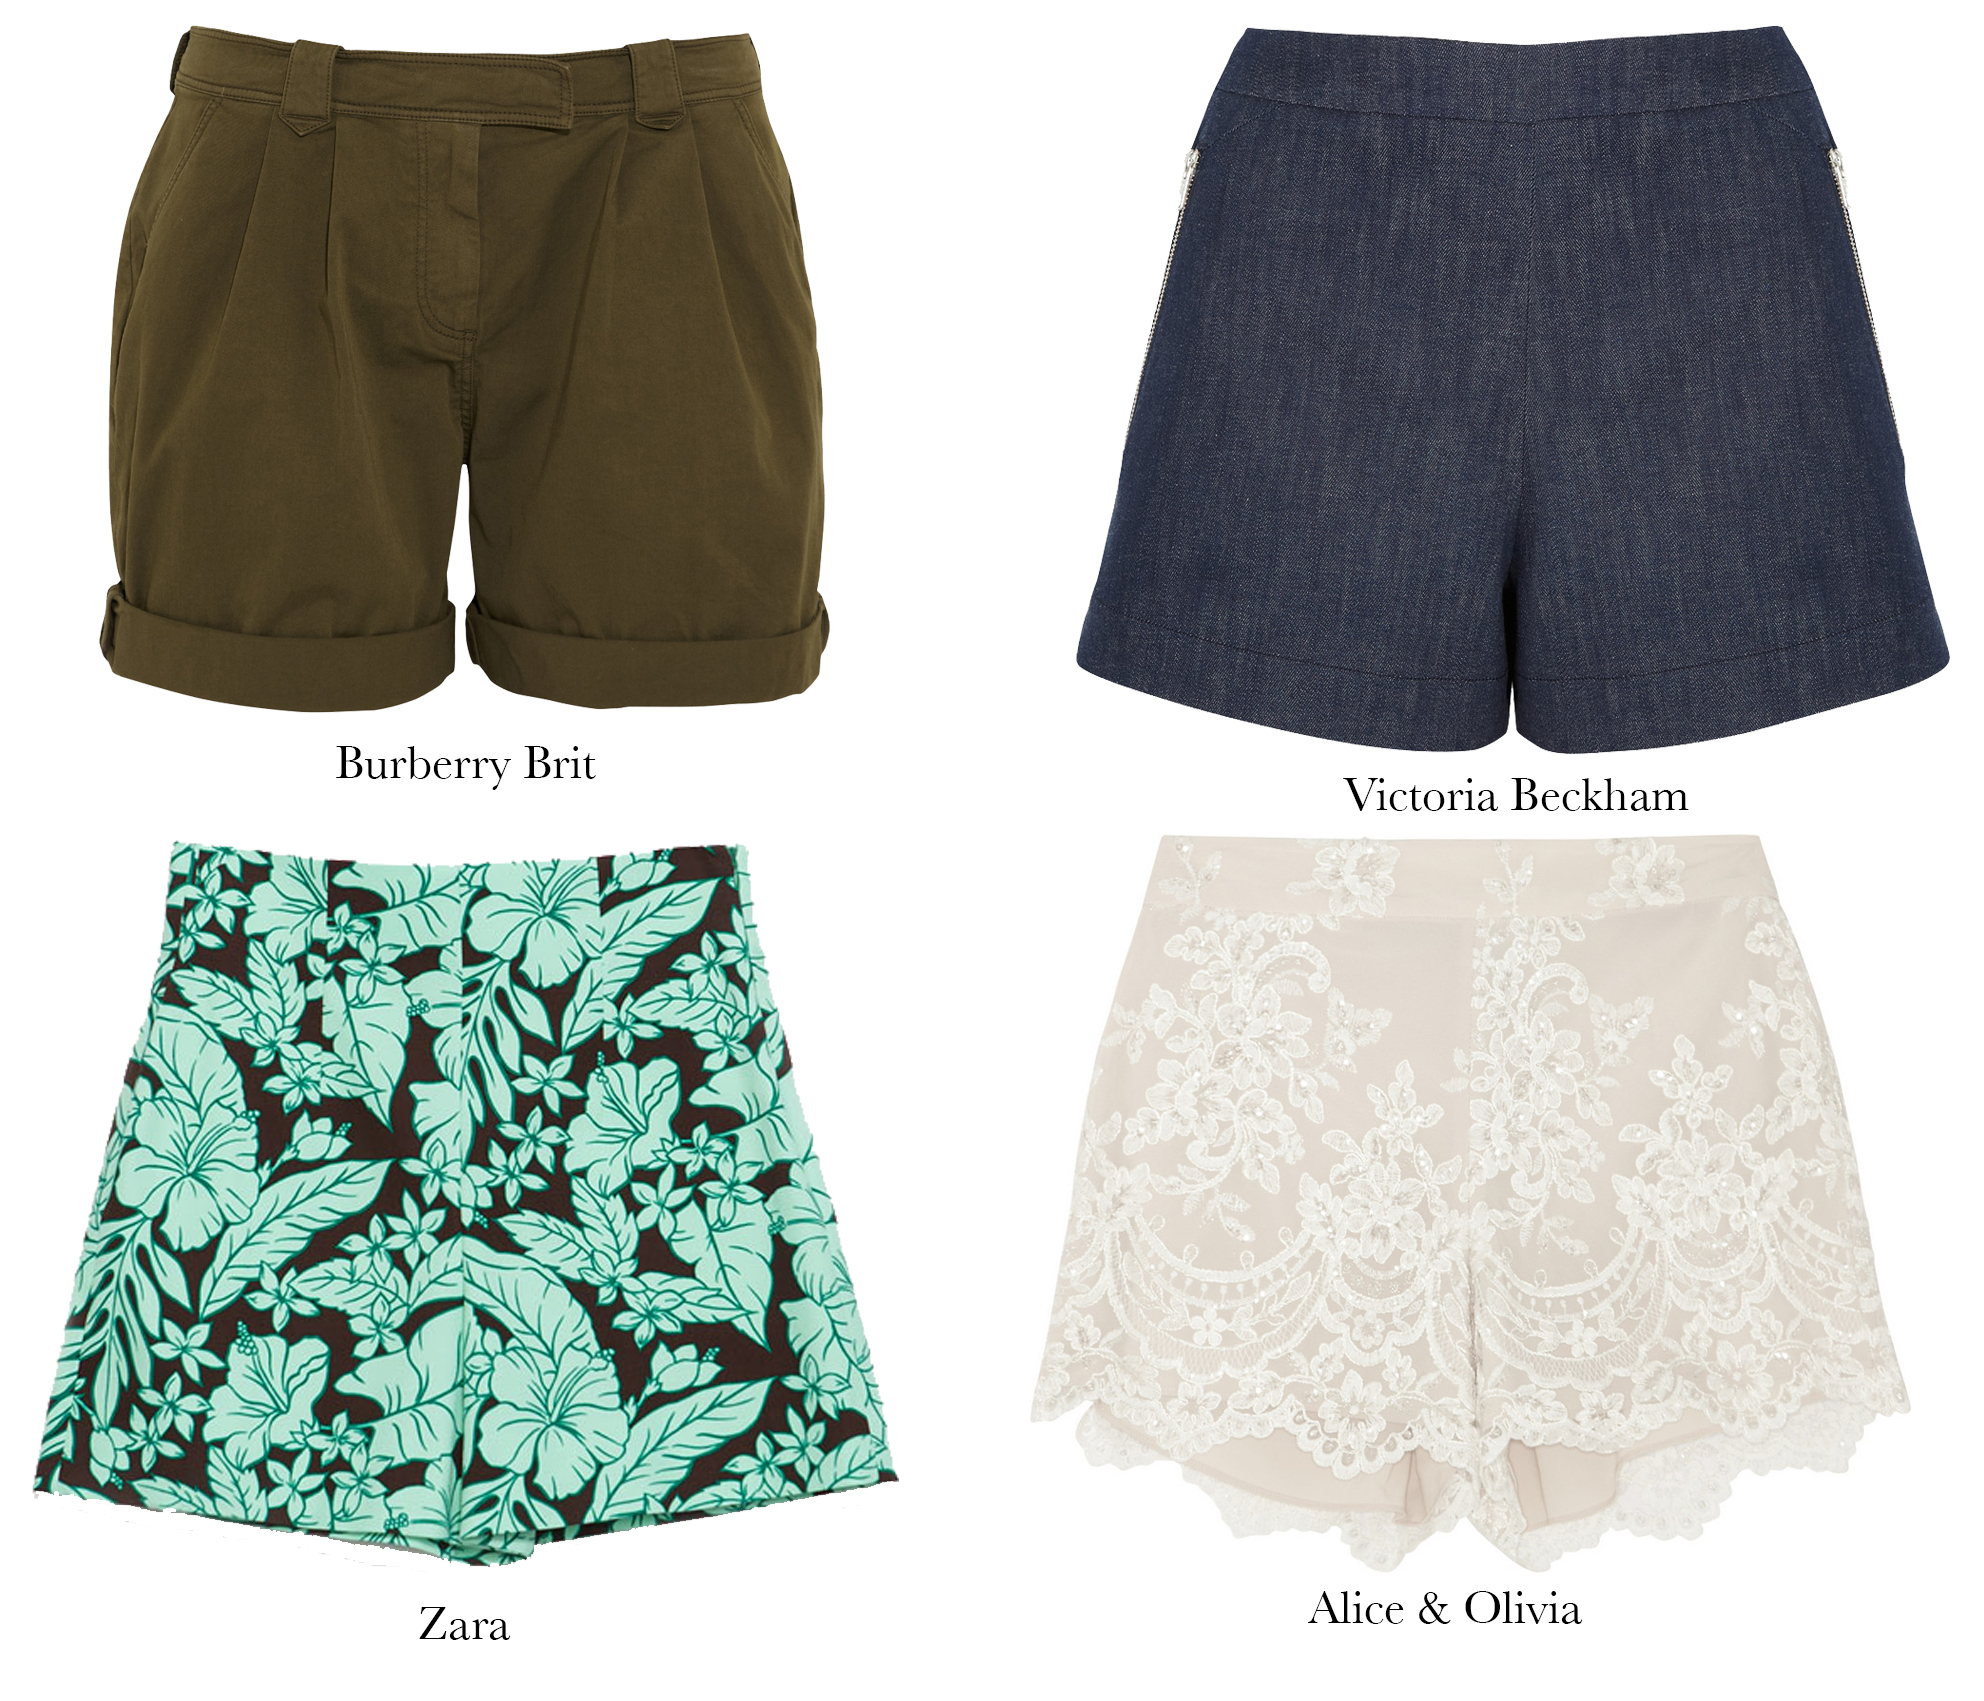 The Summer Shorts